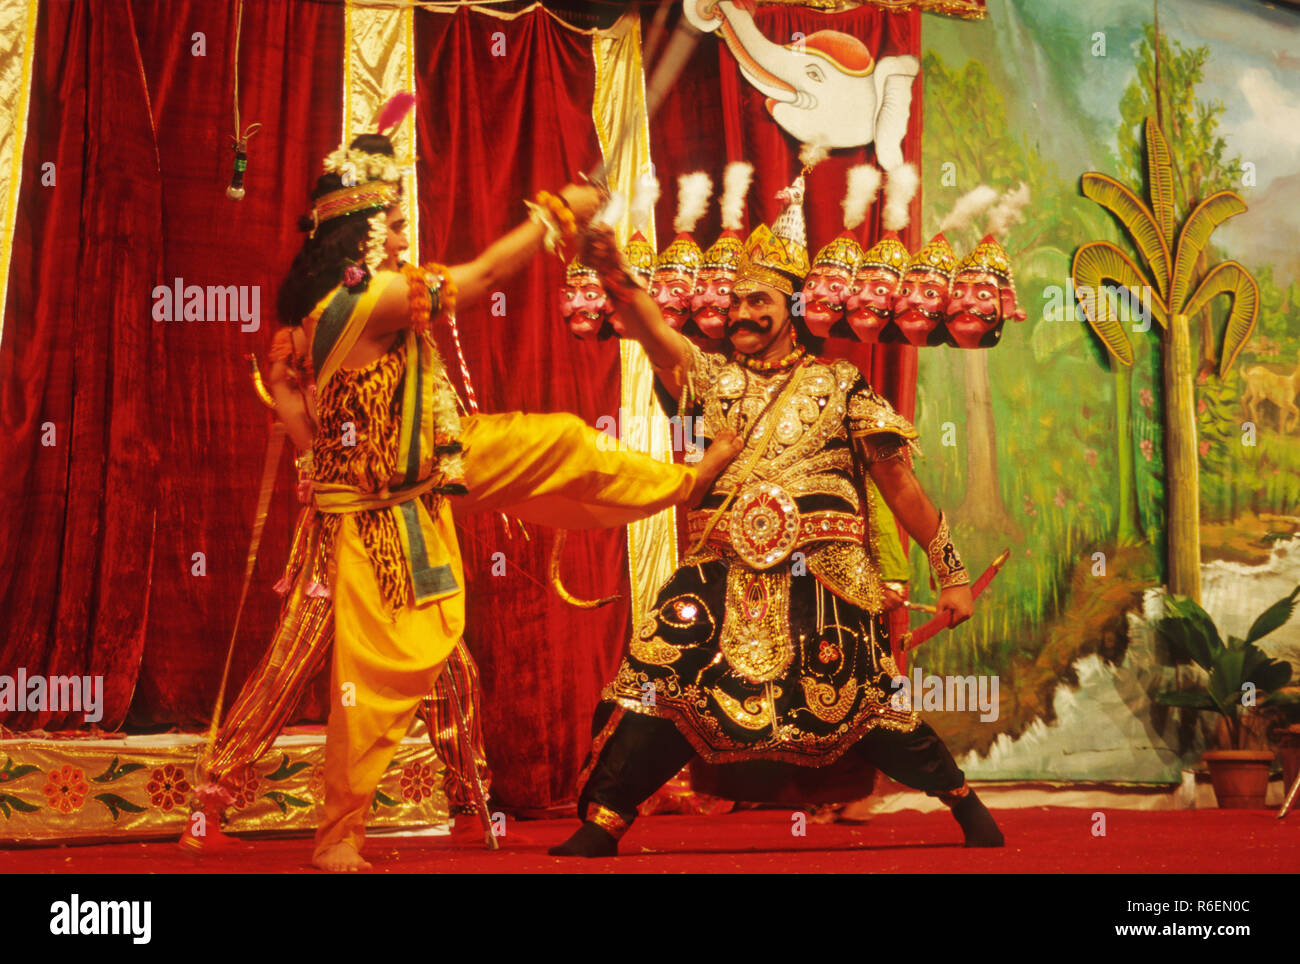 ramleela mythology play ramayan on stage showing lord rama and demon ravana ten heads fighting india Stock Photo